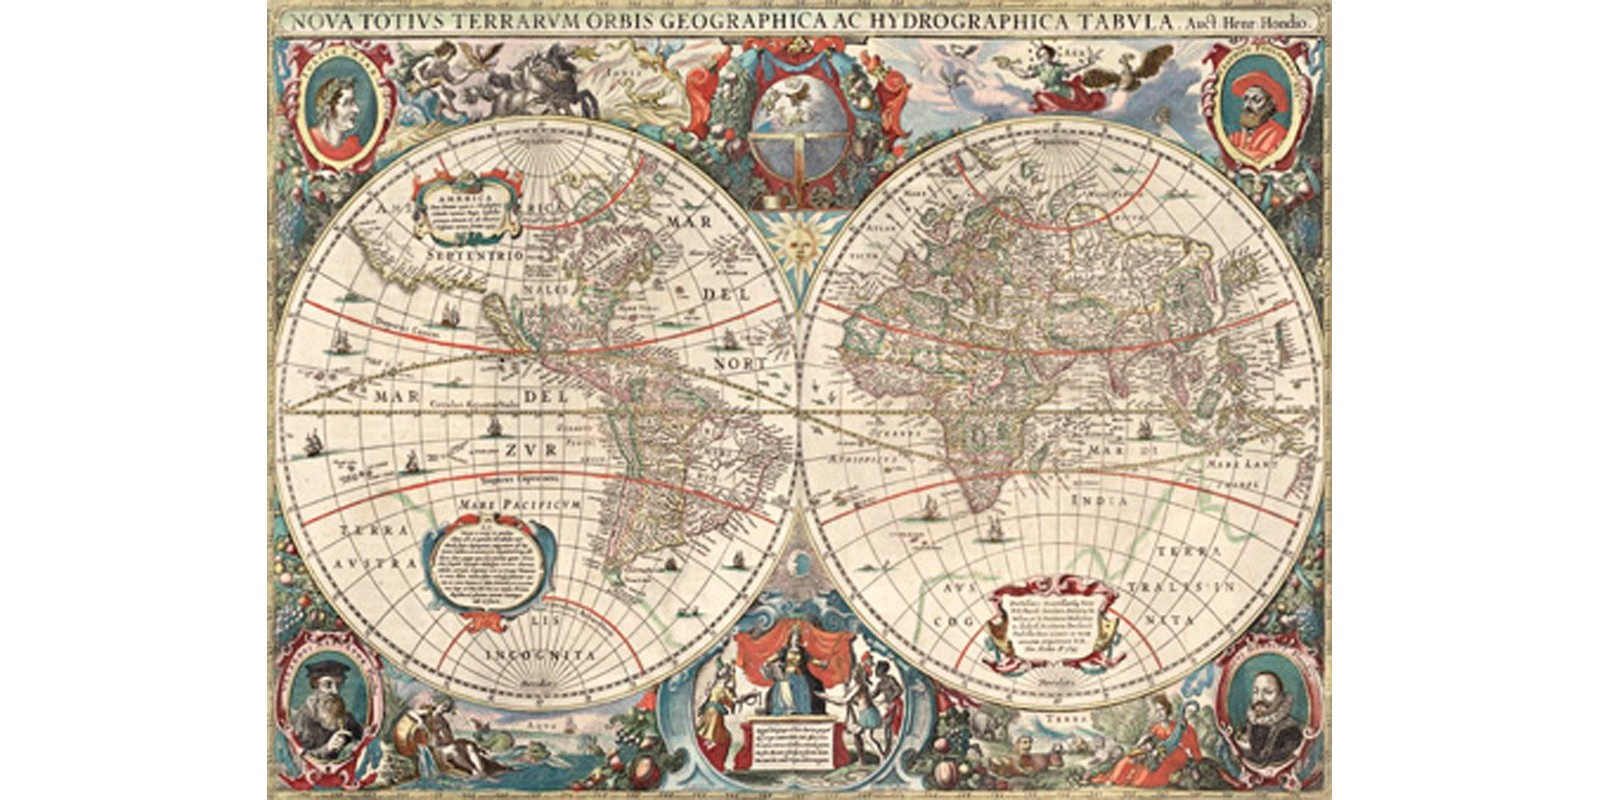 Hendrik Hondius - Nova totius Terrarum Orbis geographica ac hydrographica tabula